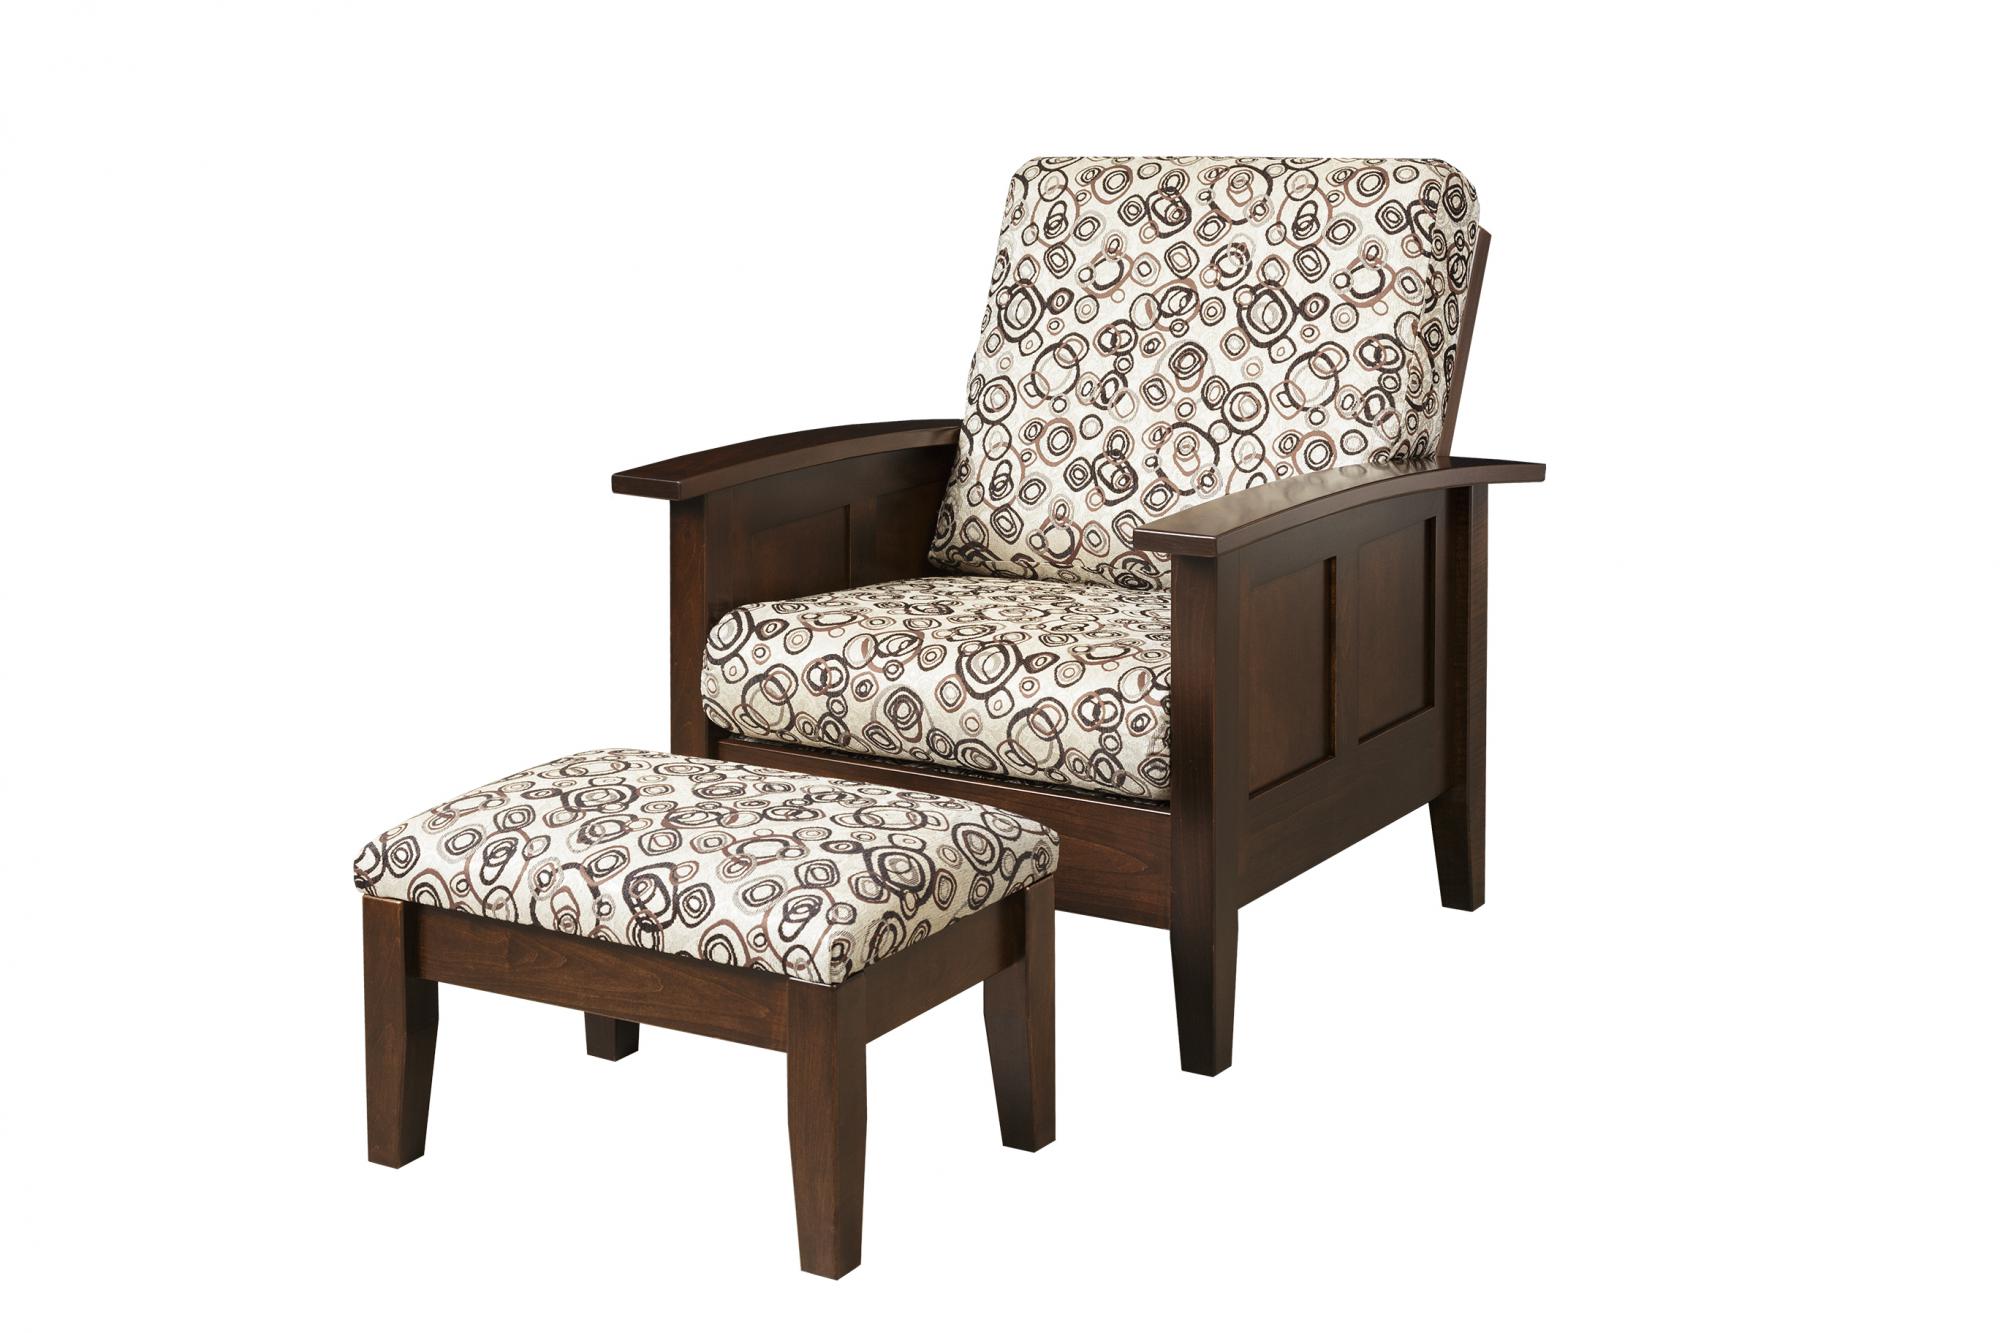 Shaker Petite Morris Chair and Ottoman